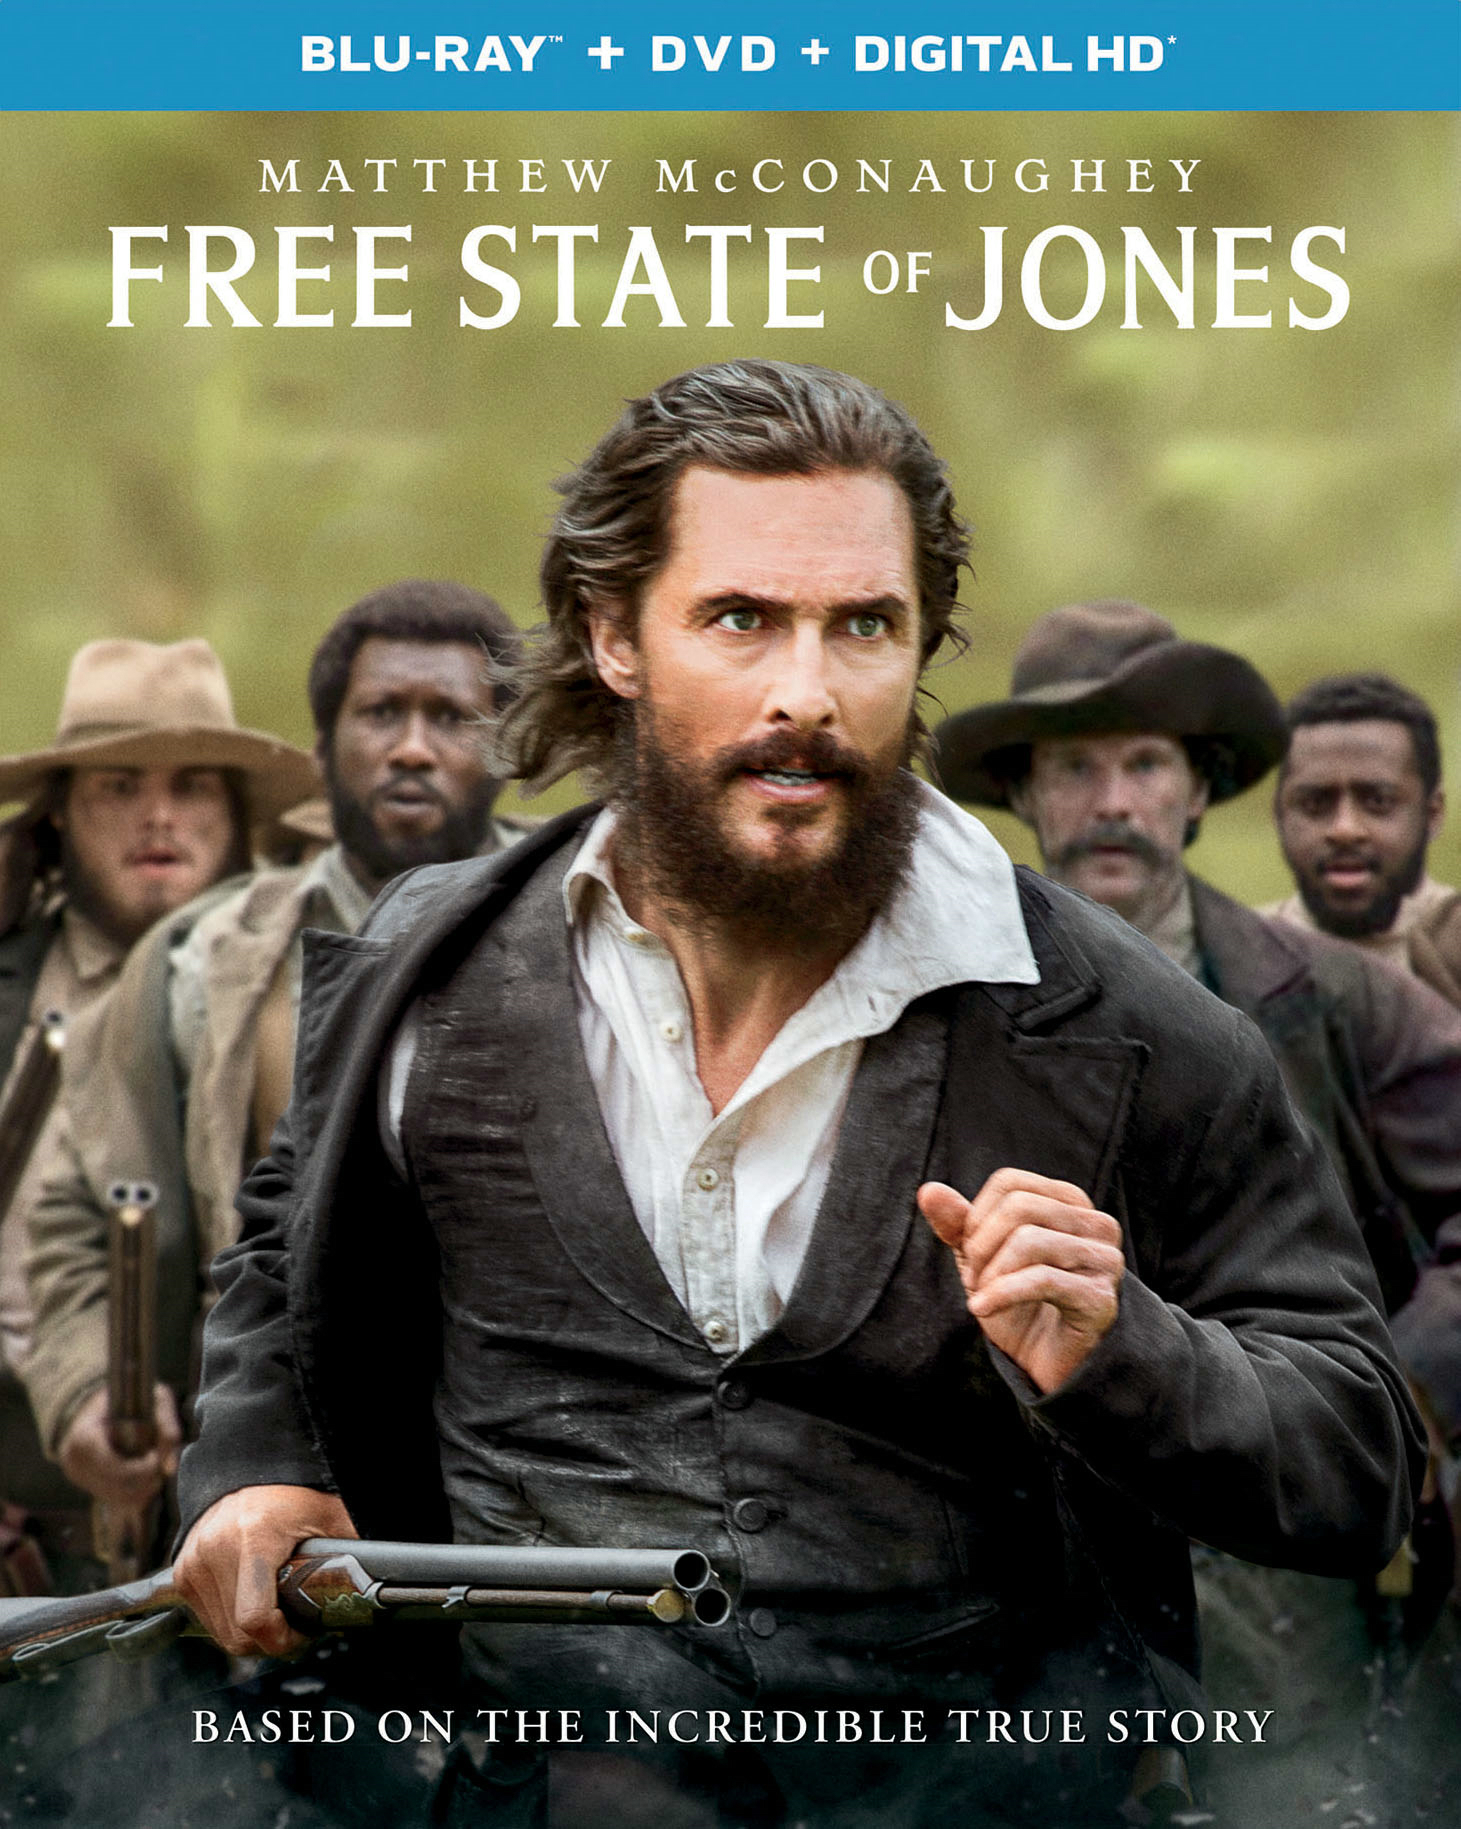 Free State Of Jones (DVD + Digital) - Blu-ray [ 2016 ]  - War Movies On Blu-ray - Movies On GRUV